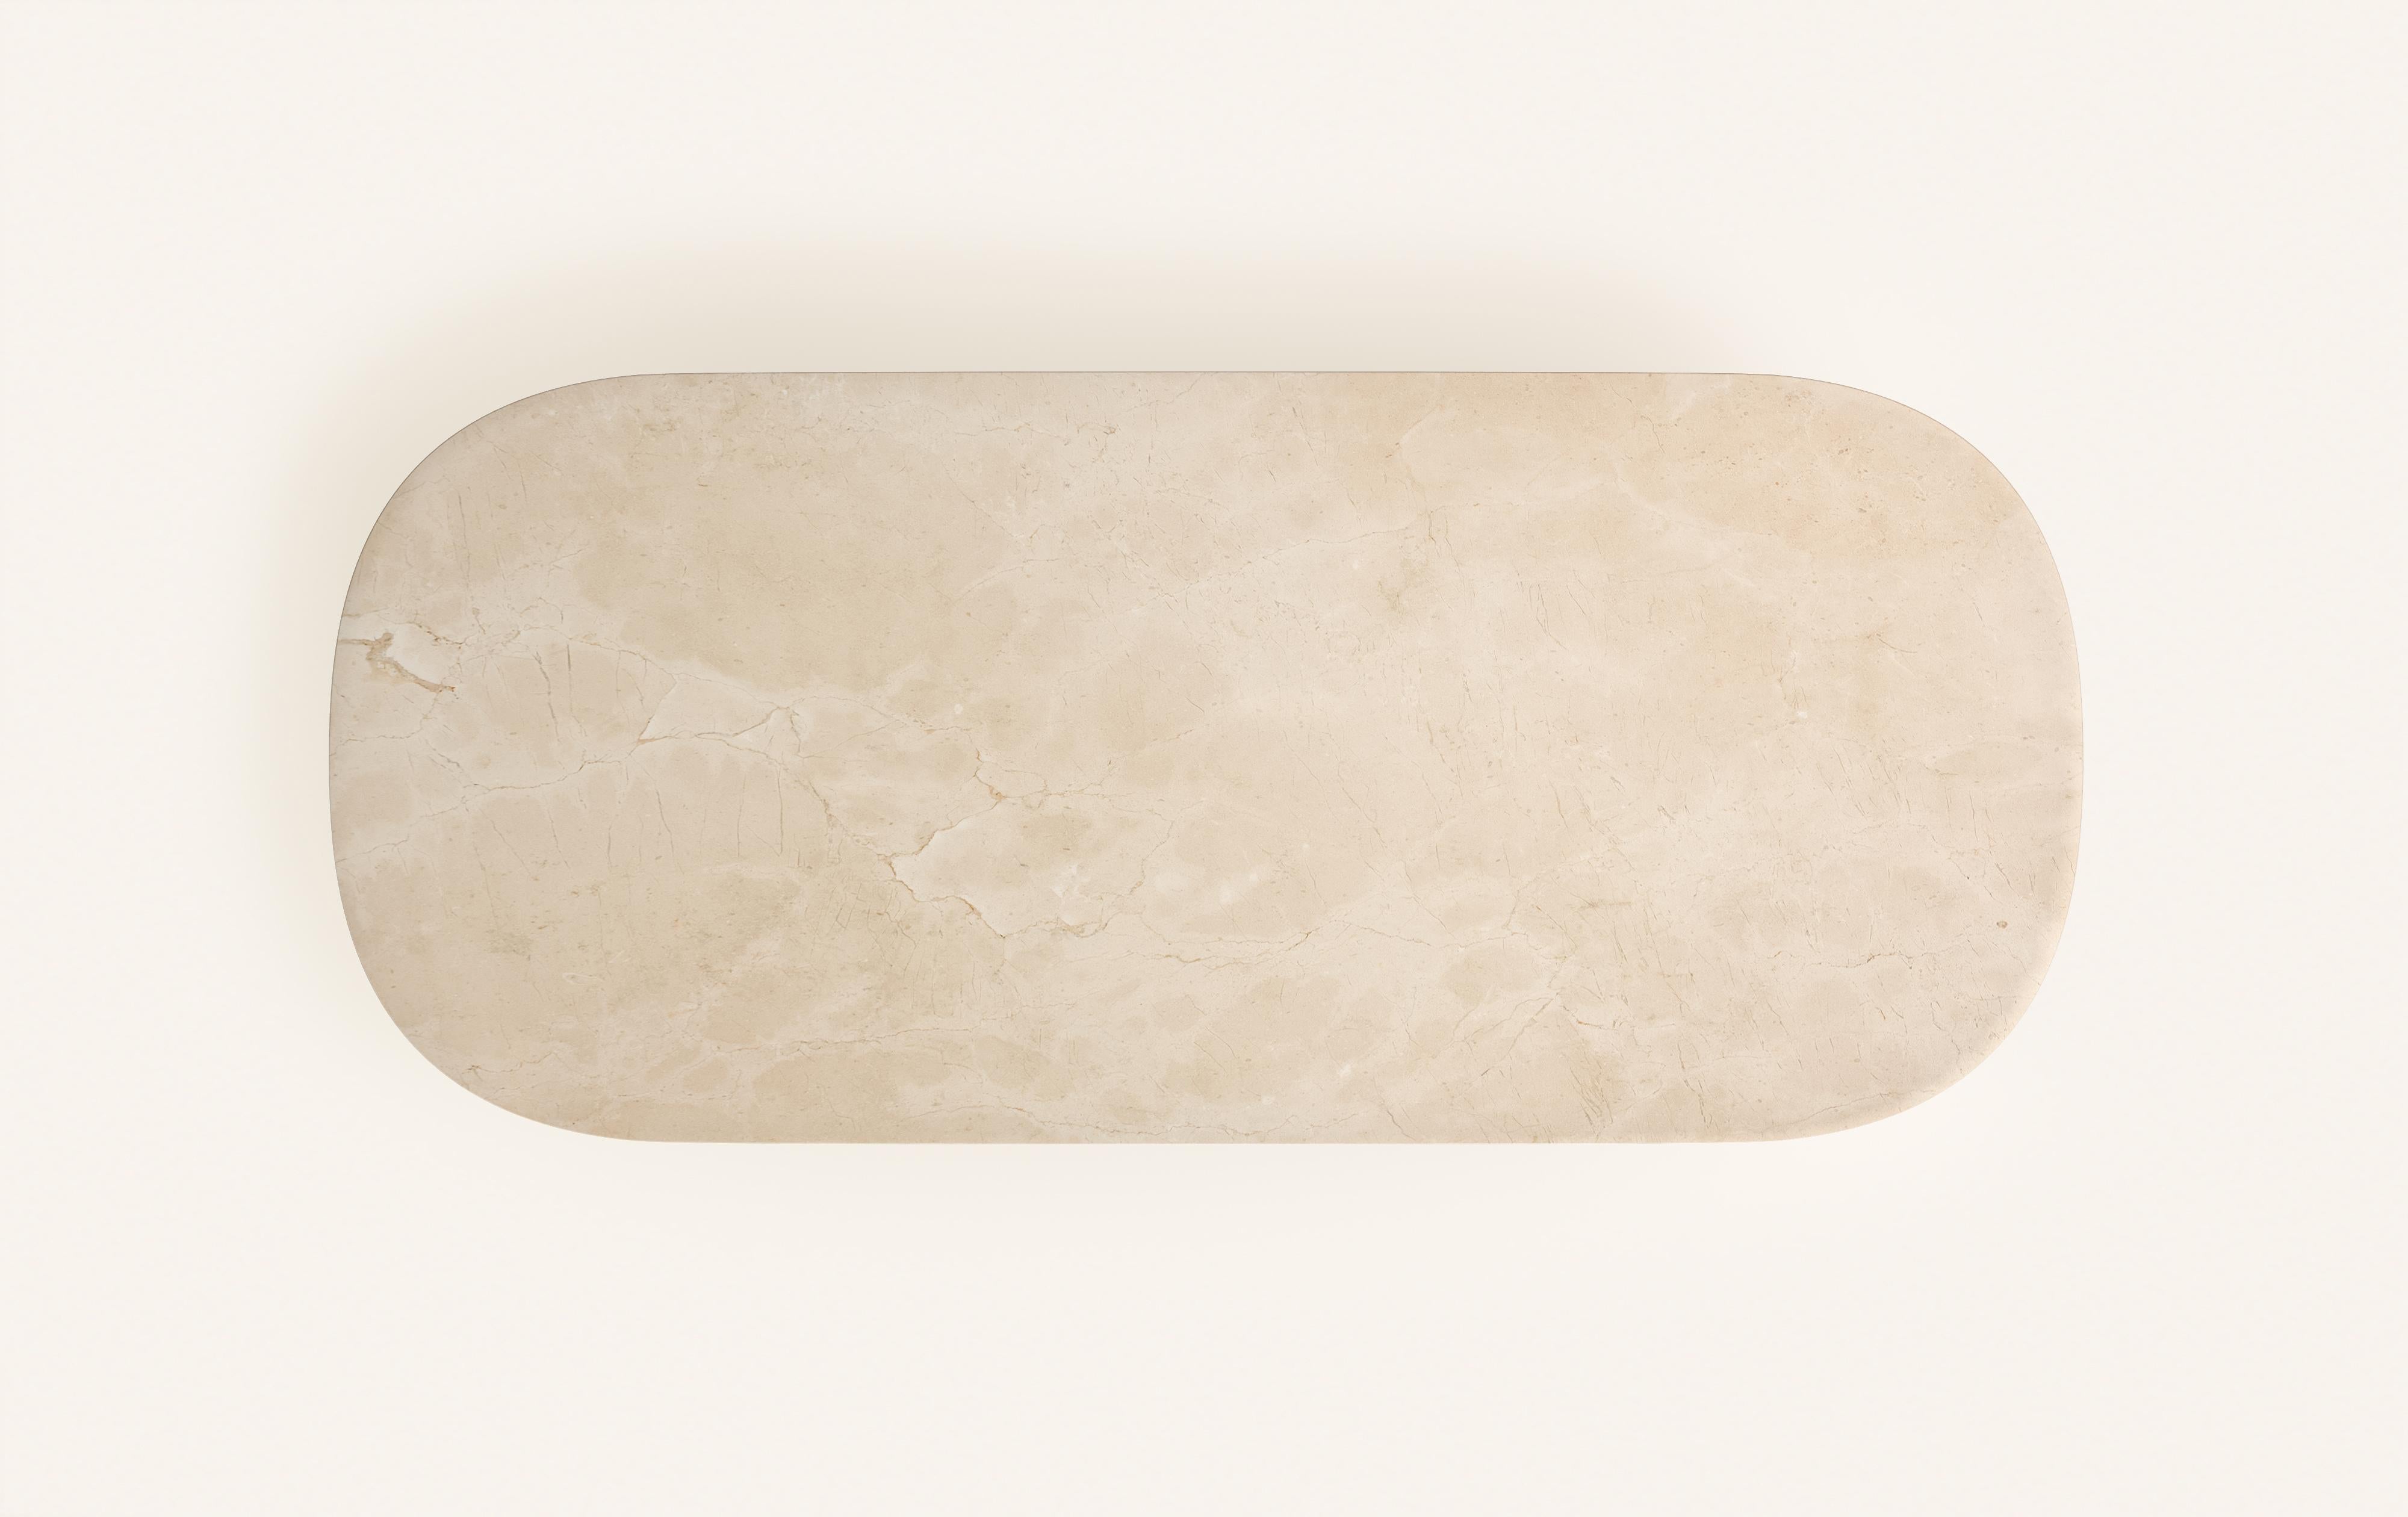 FORM(LA) Cono Oval Dining Table 84”L x 42”W x 30”H Crema Marfil Marble In New Condition For Sale In Los Angeles, CA